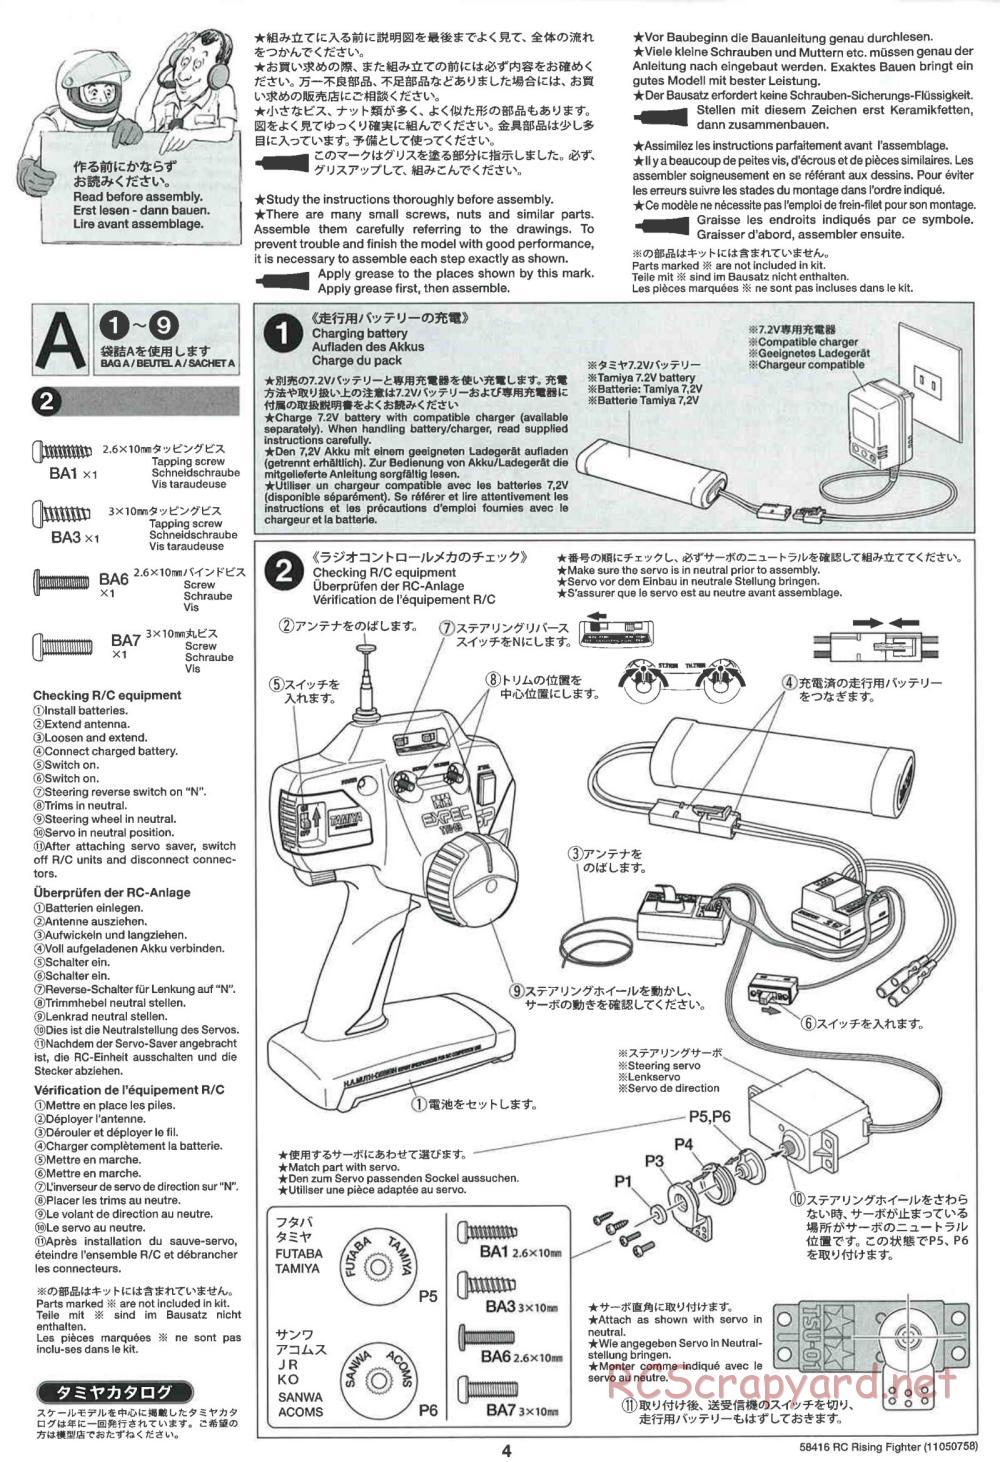 Tamiya - Rising Fighter Chassis - Manual - Page 4